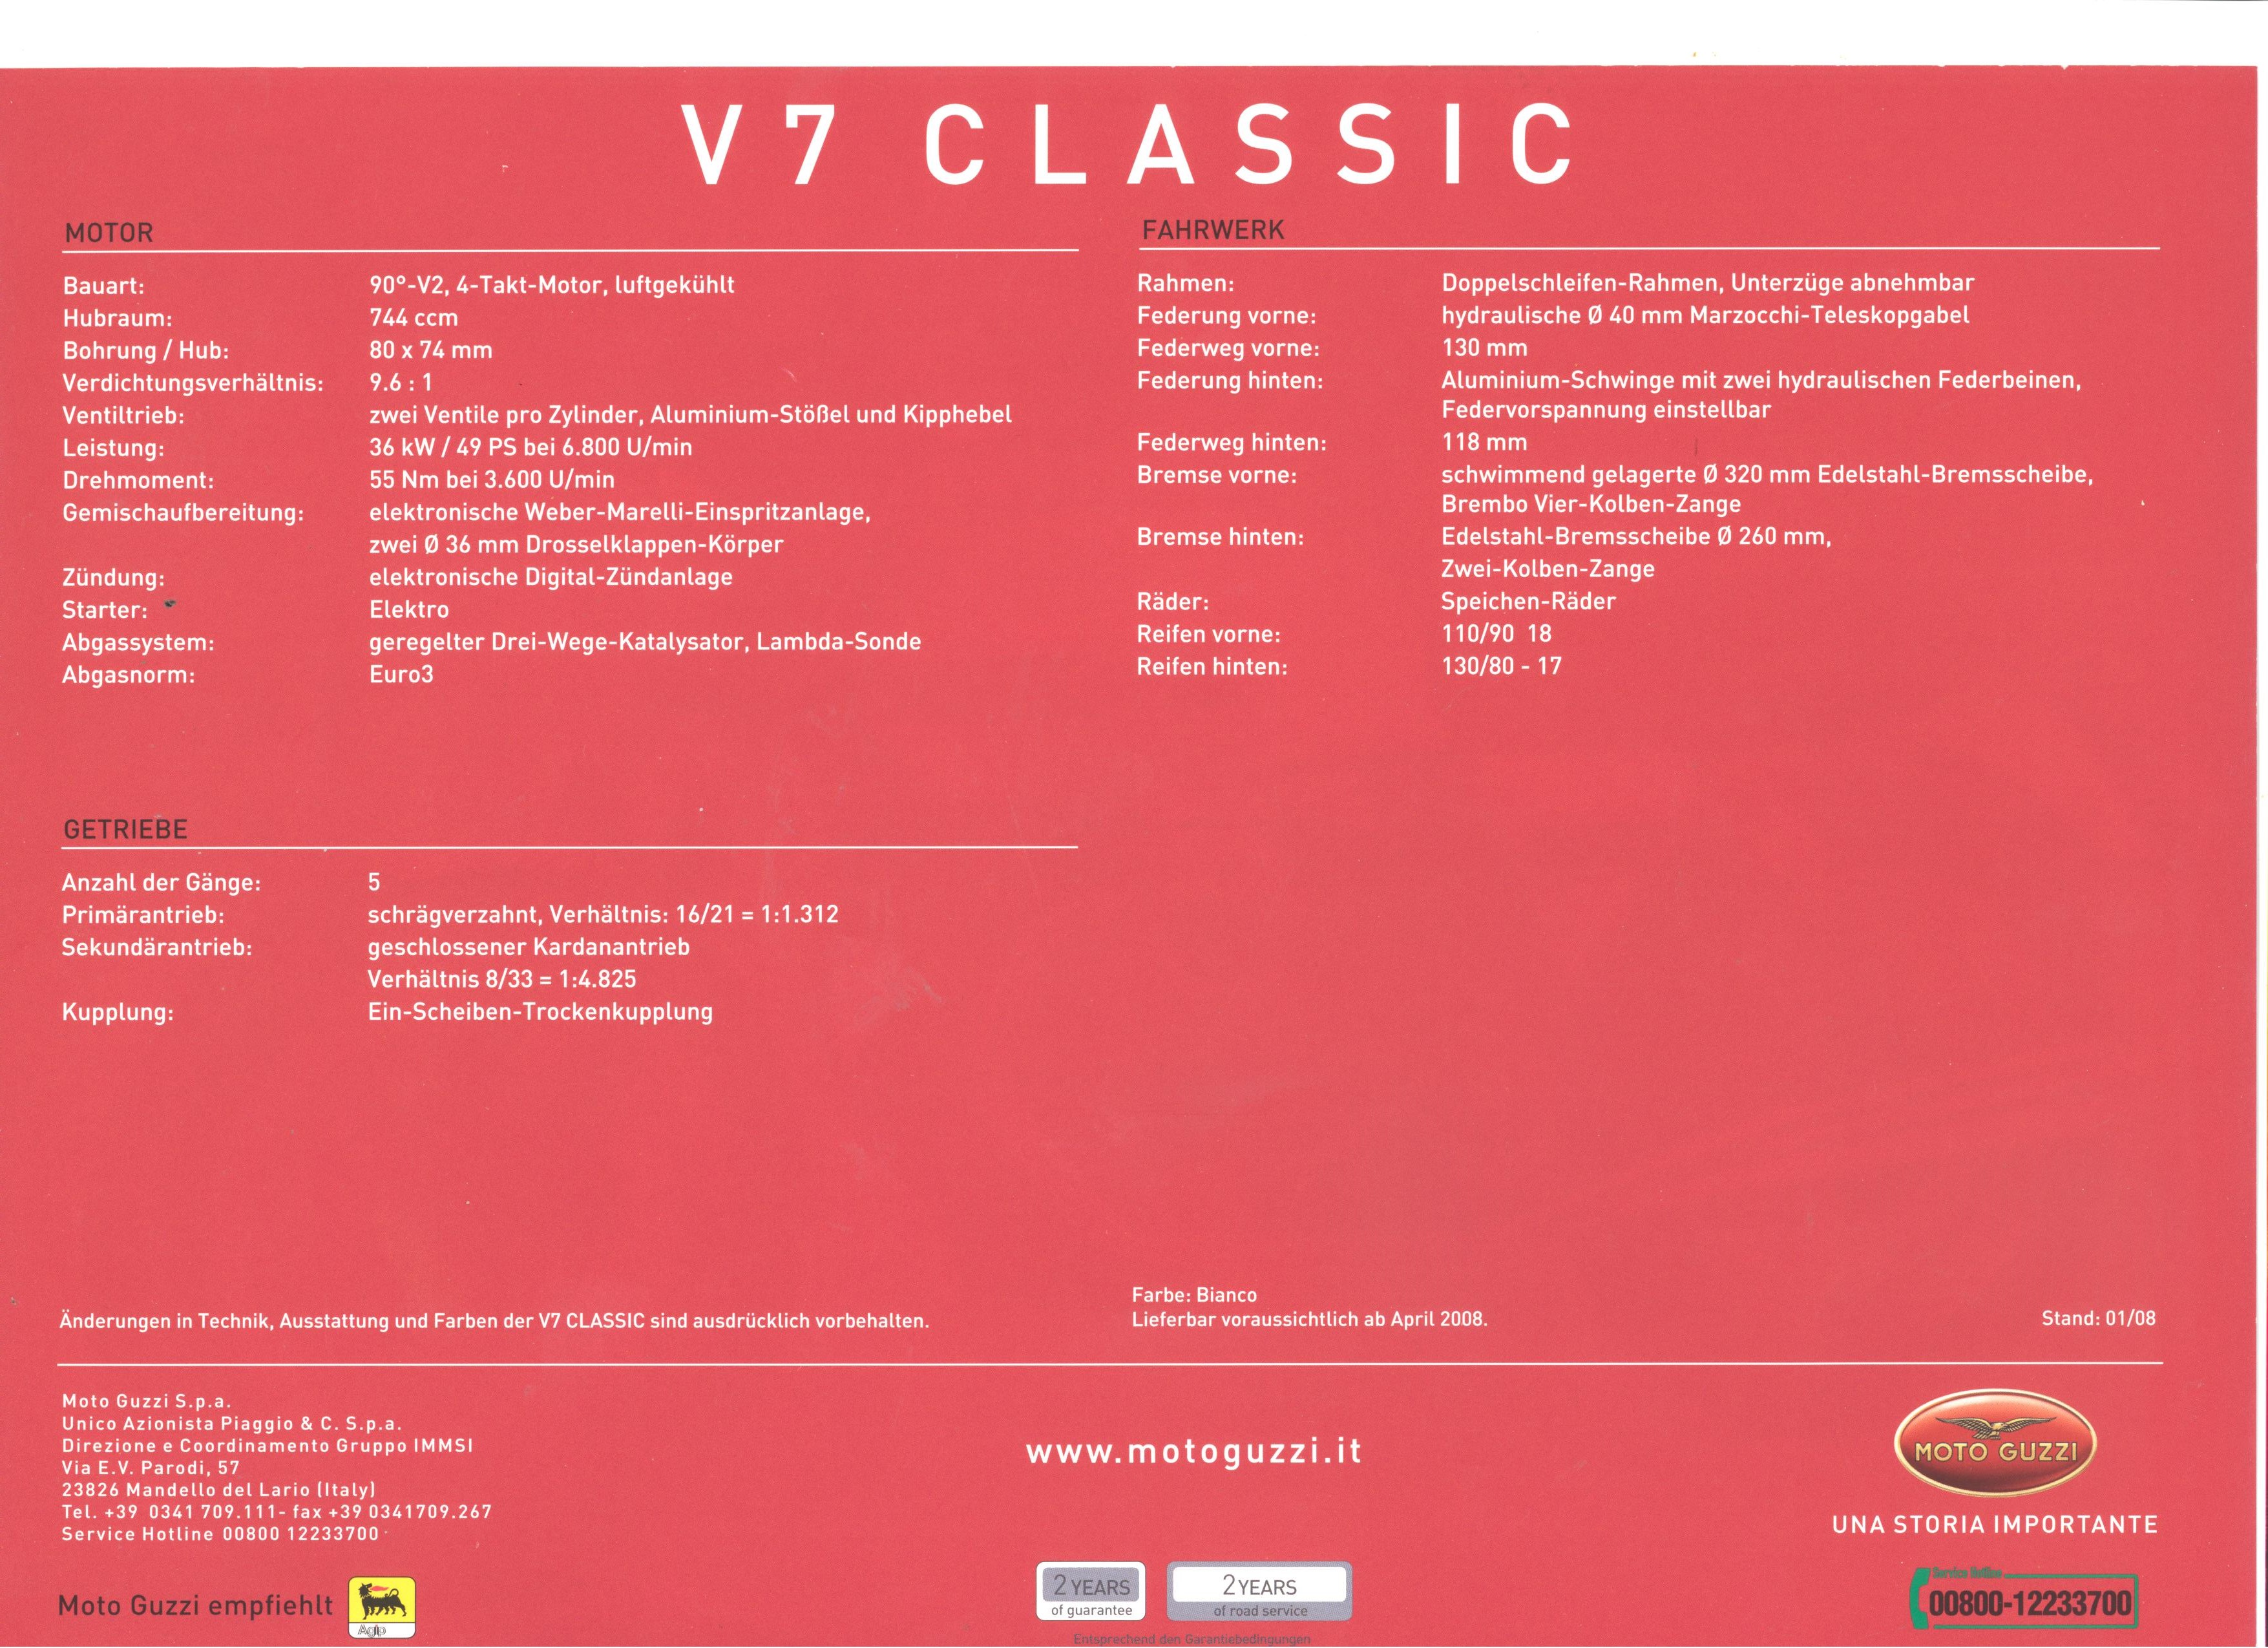 Moto Guzzi factory brochure: V7 Classic